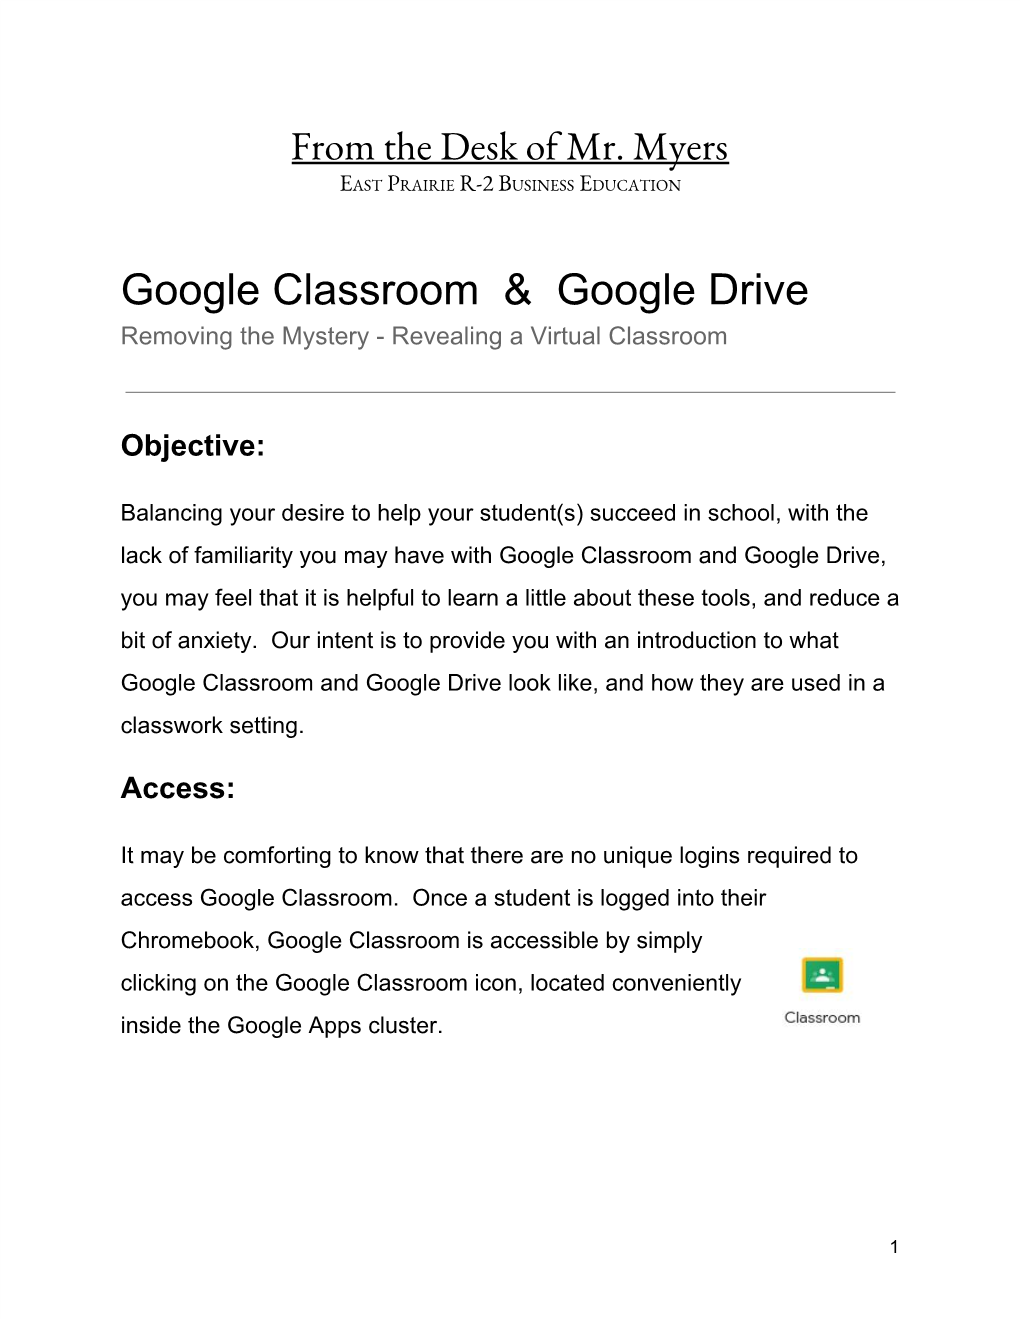 Google Classroom & Google Drive